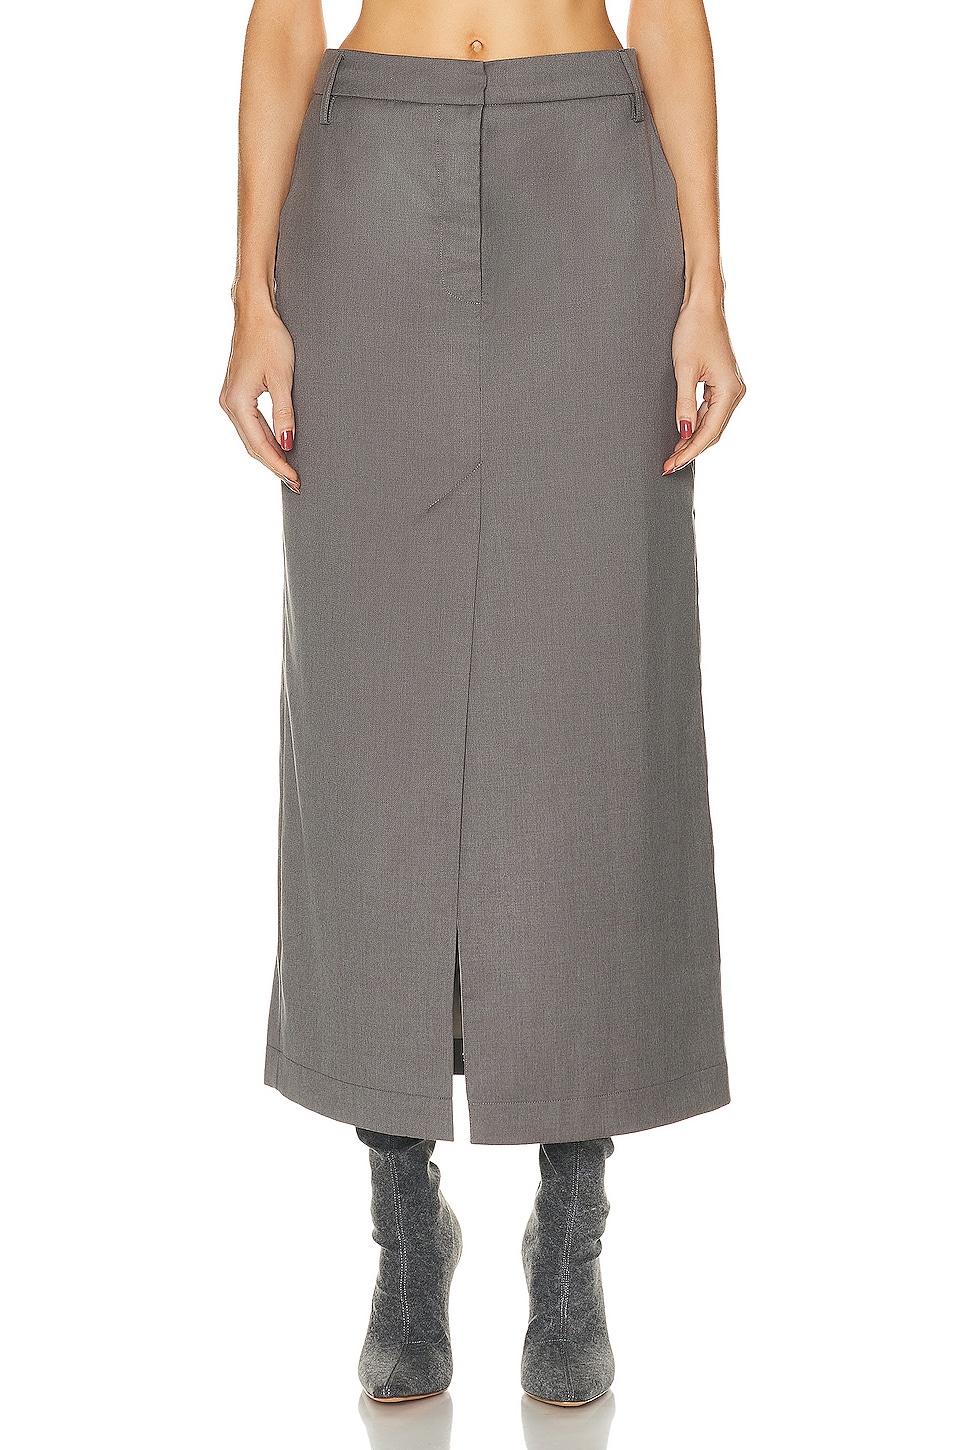 REMAIN Long Suiting Skirt in Dark Gull Gray | FWRD